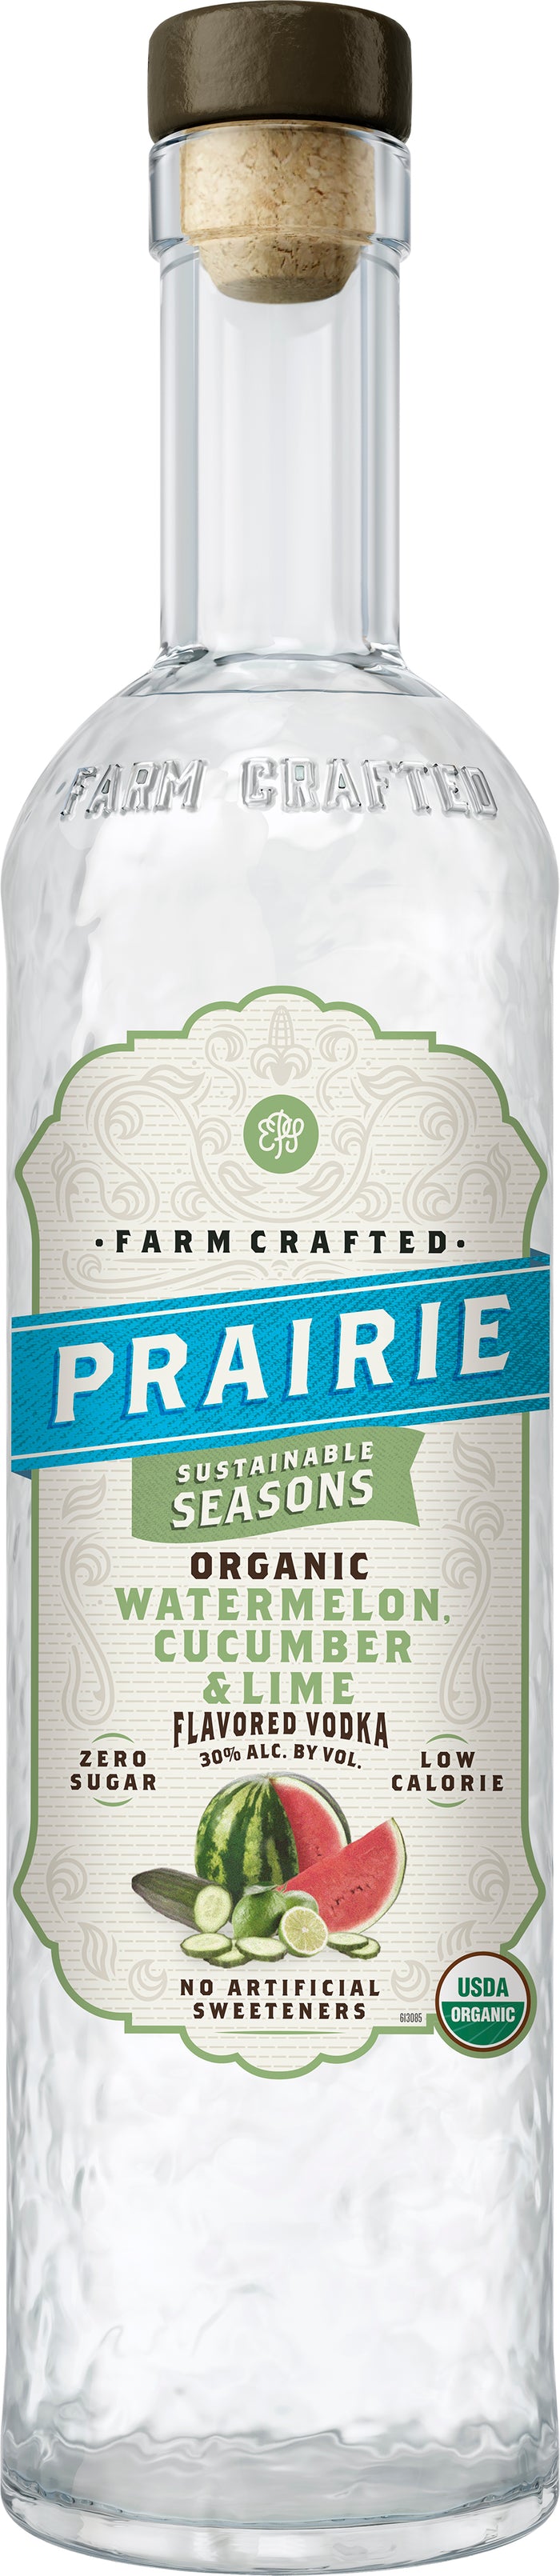 Prairie Organic Sustainable Watermelon Cucumber & Lime Vodka